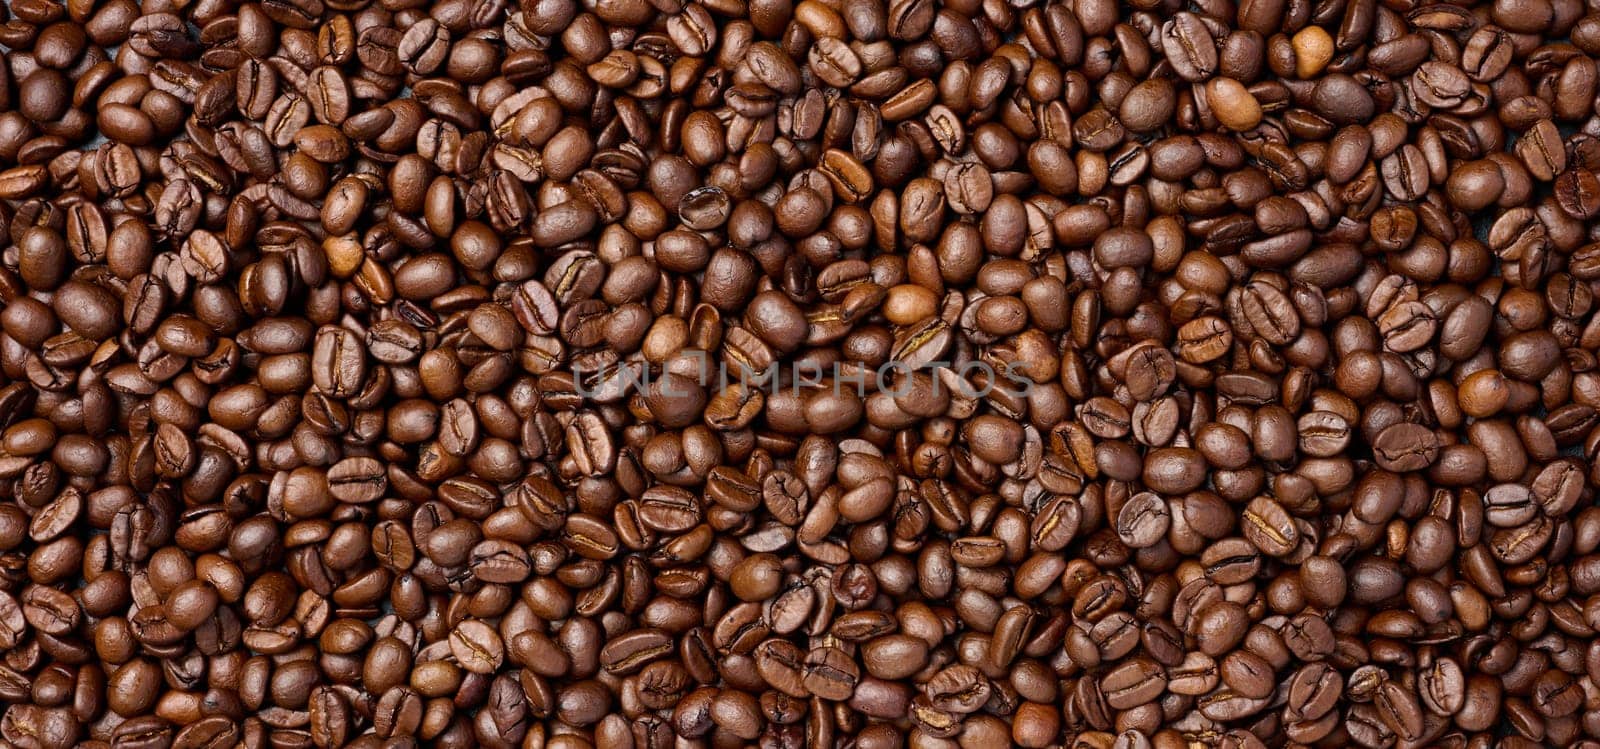 Scattered roasted coffee beans, full frame